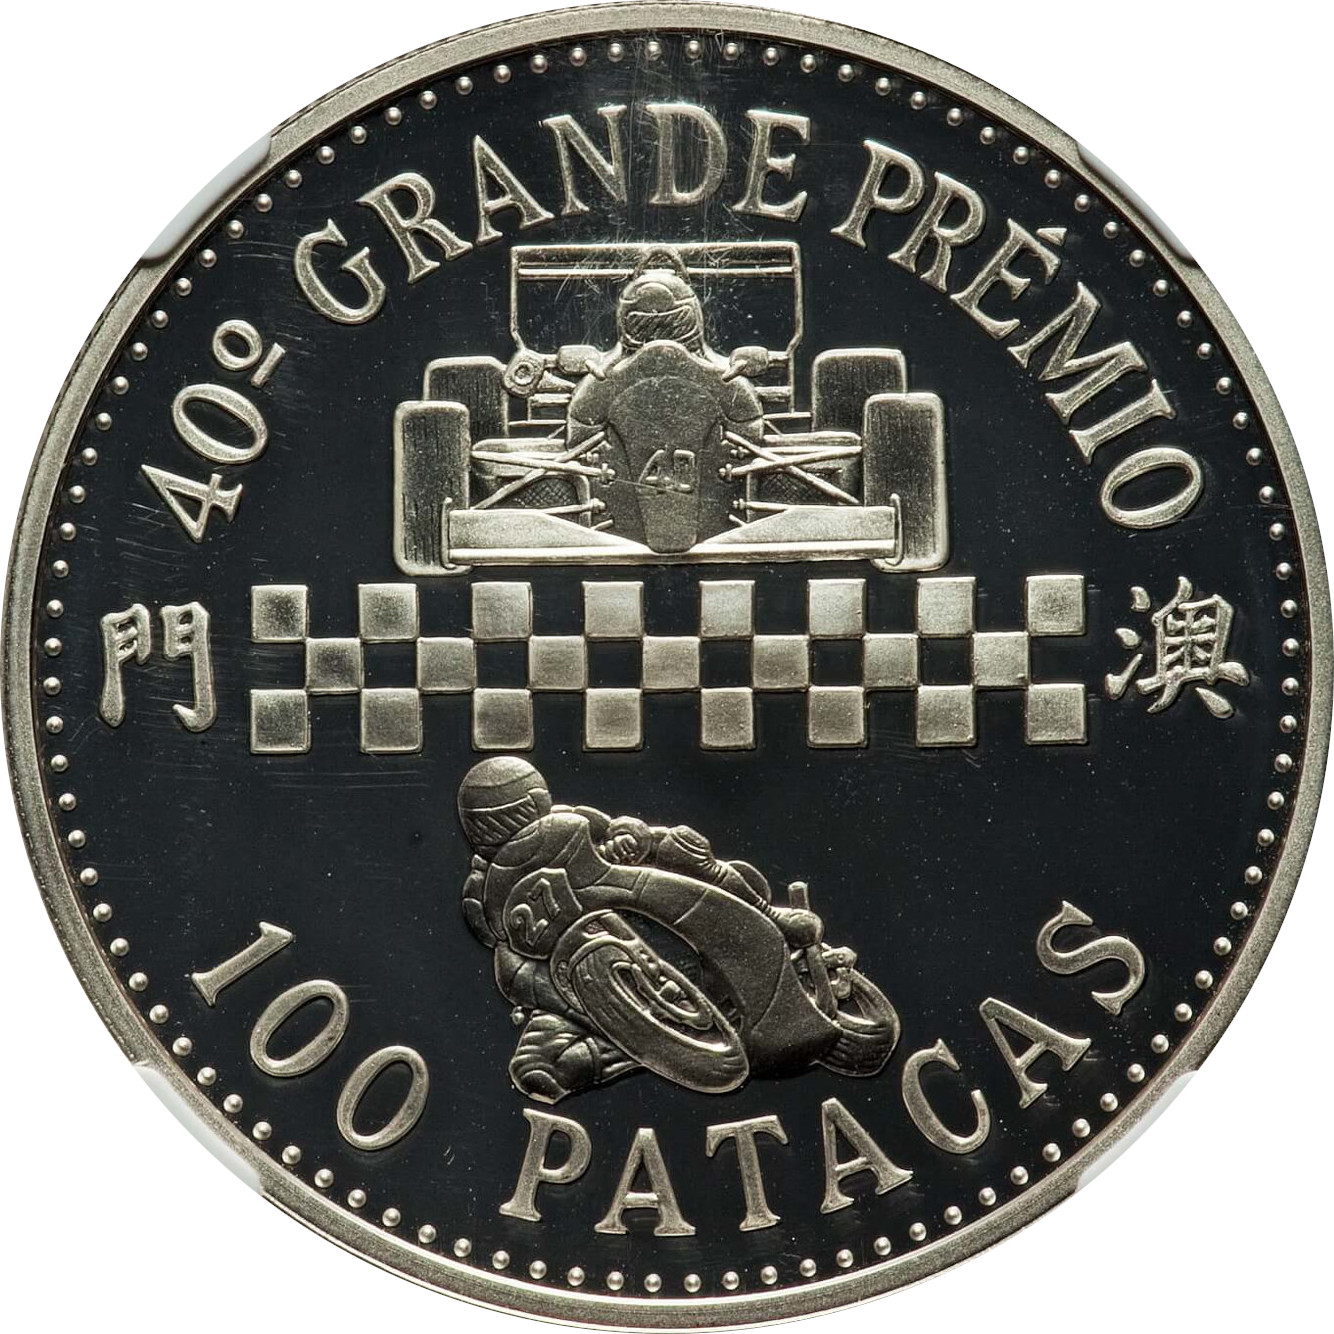 100 patacas - Premier Grand Prix - 40 years